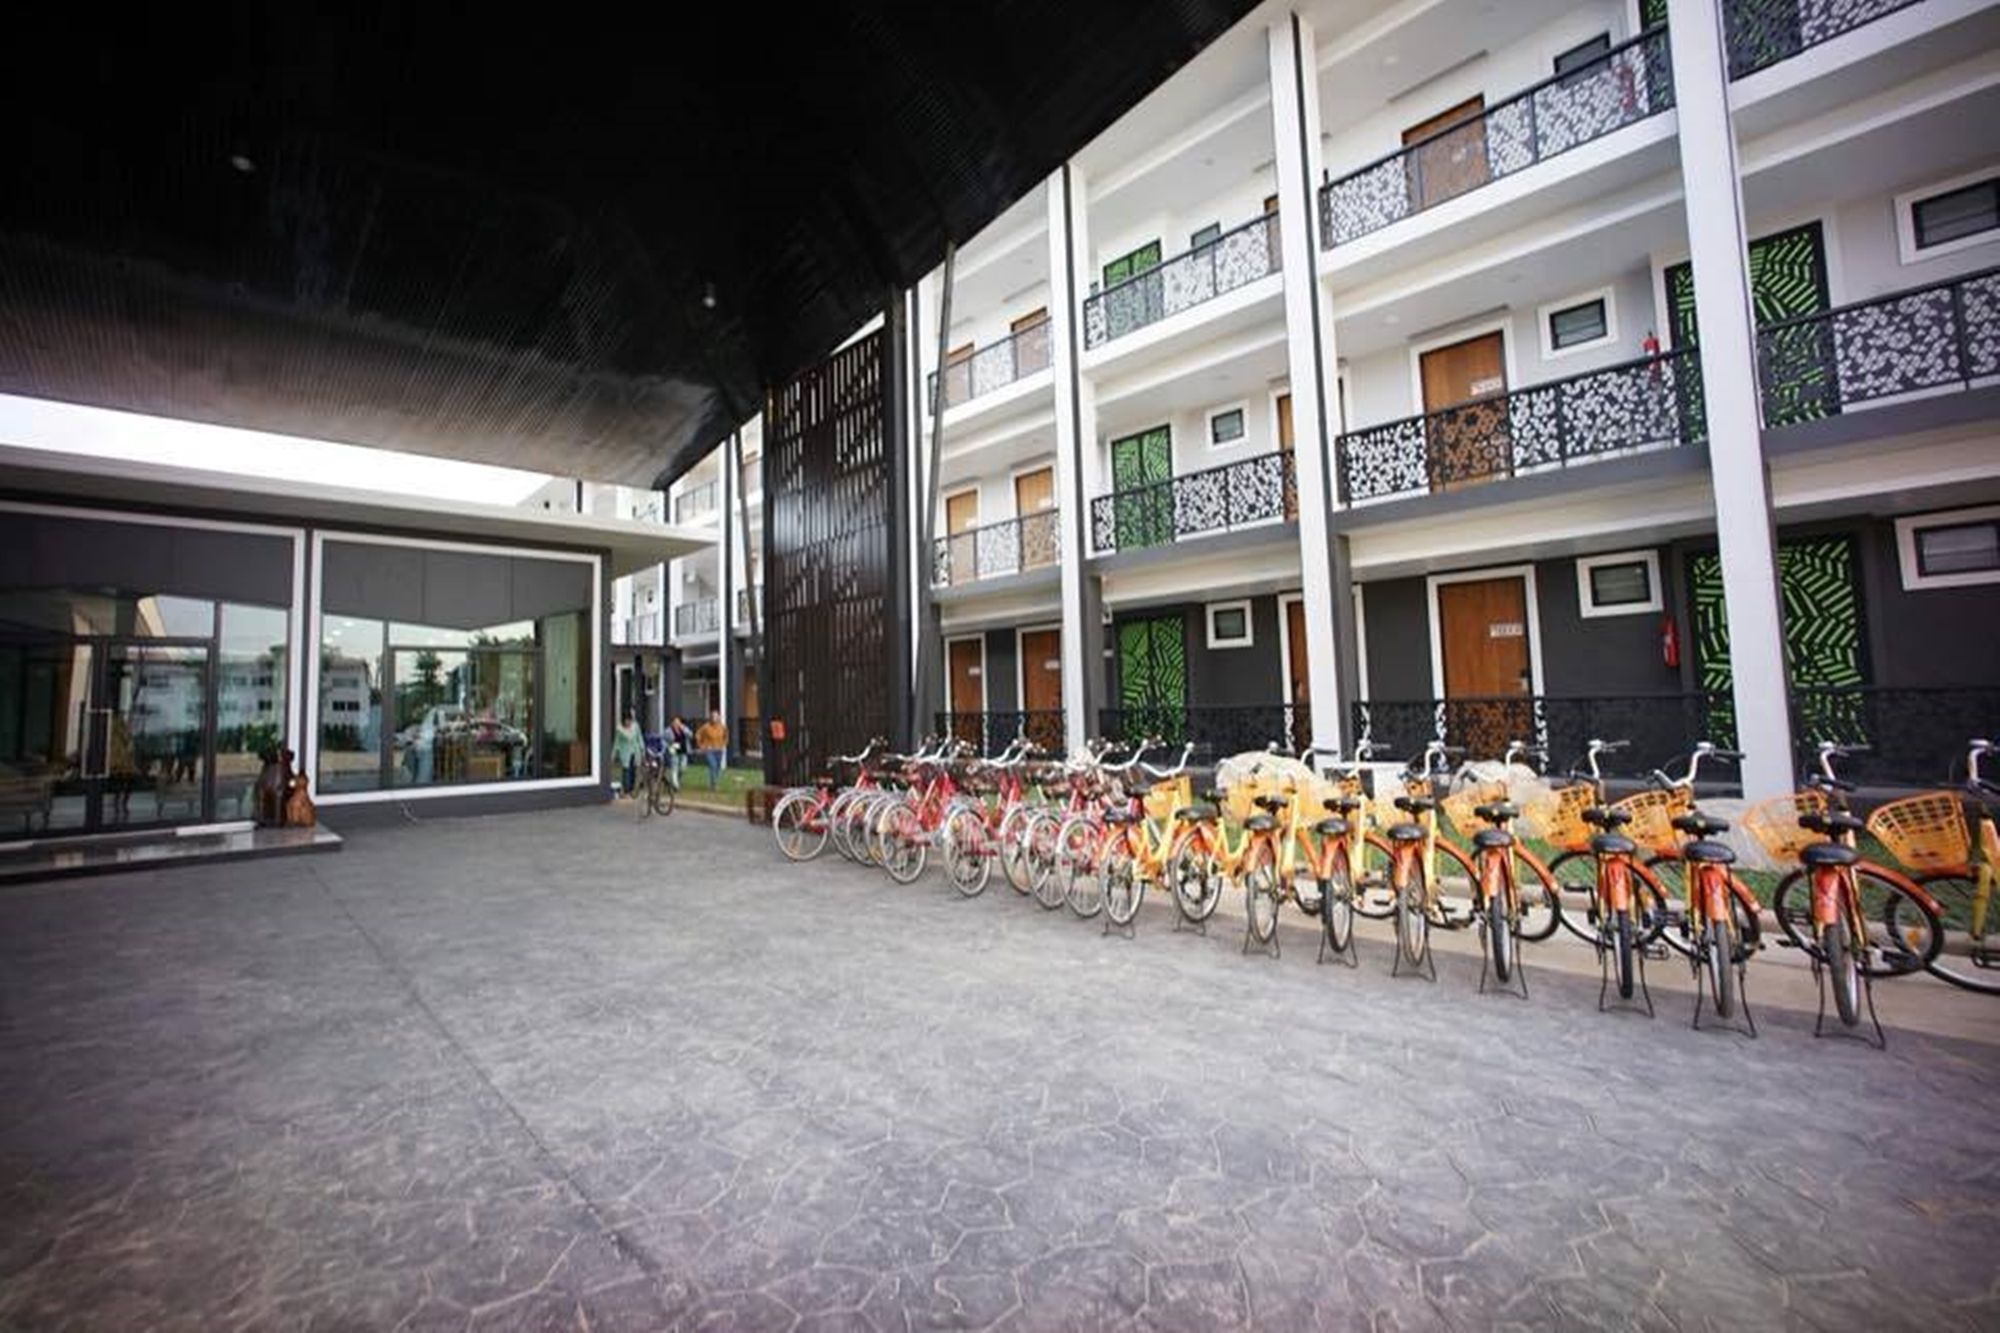 Namthong Nan Hotel Exterior photo